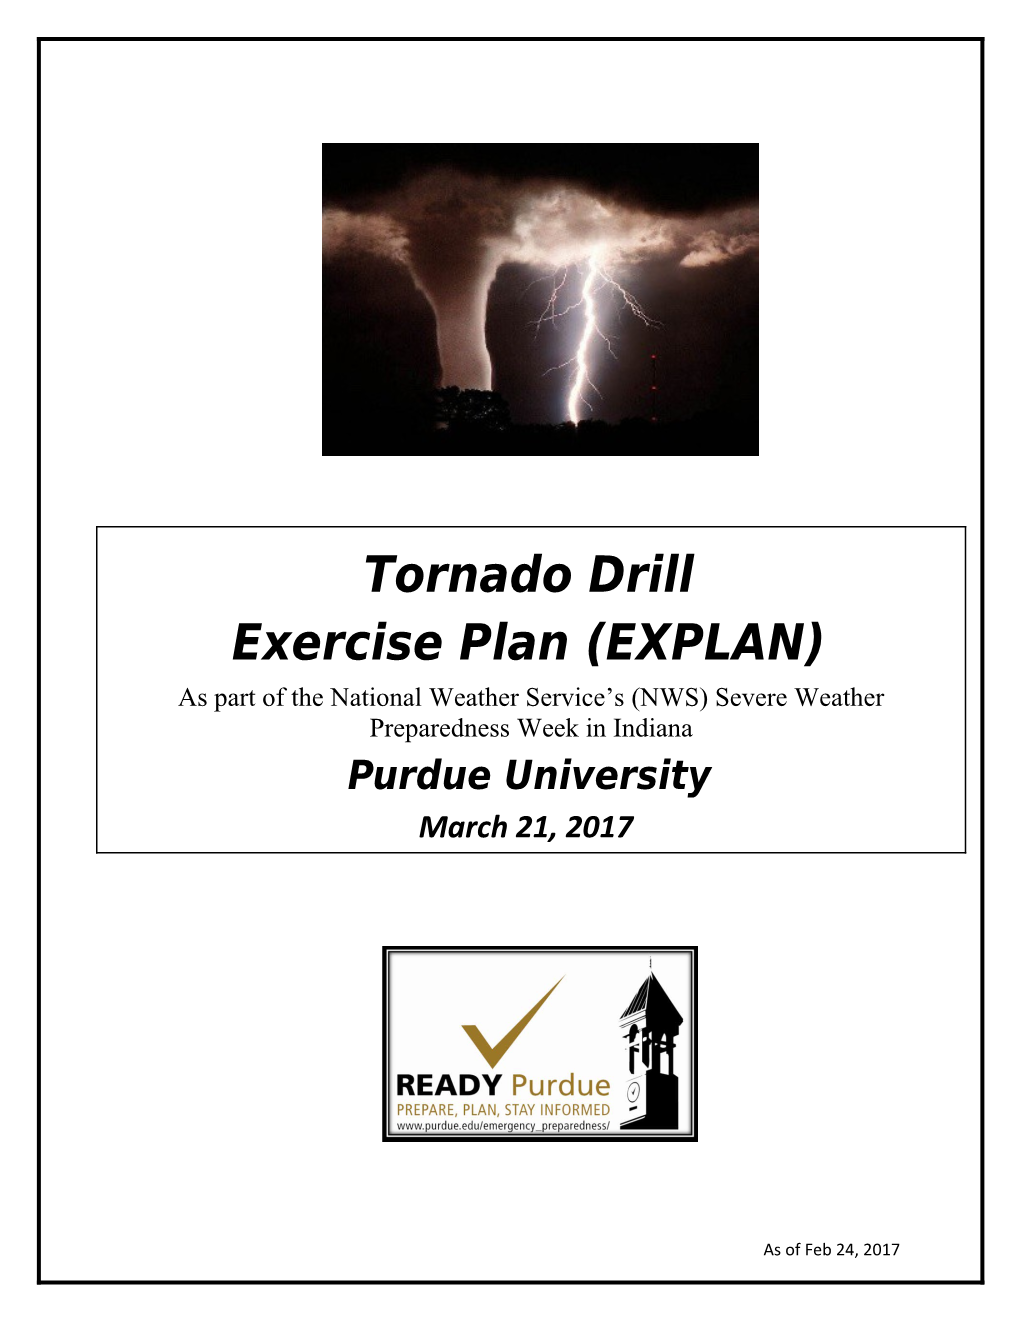 Emergency Preparedness Office 2017 Tornado Drill